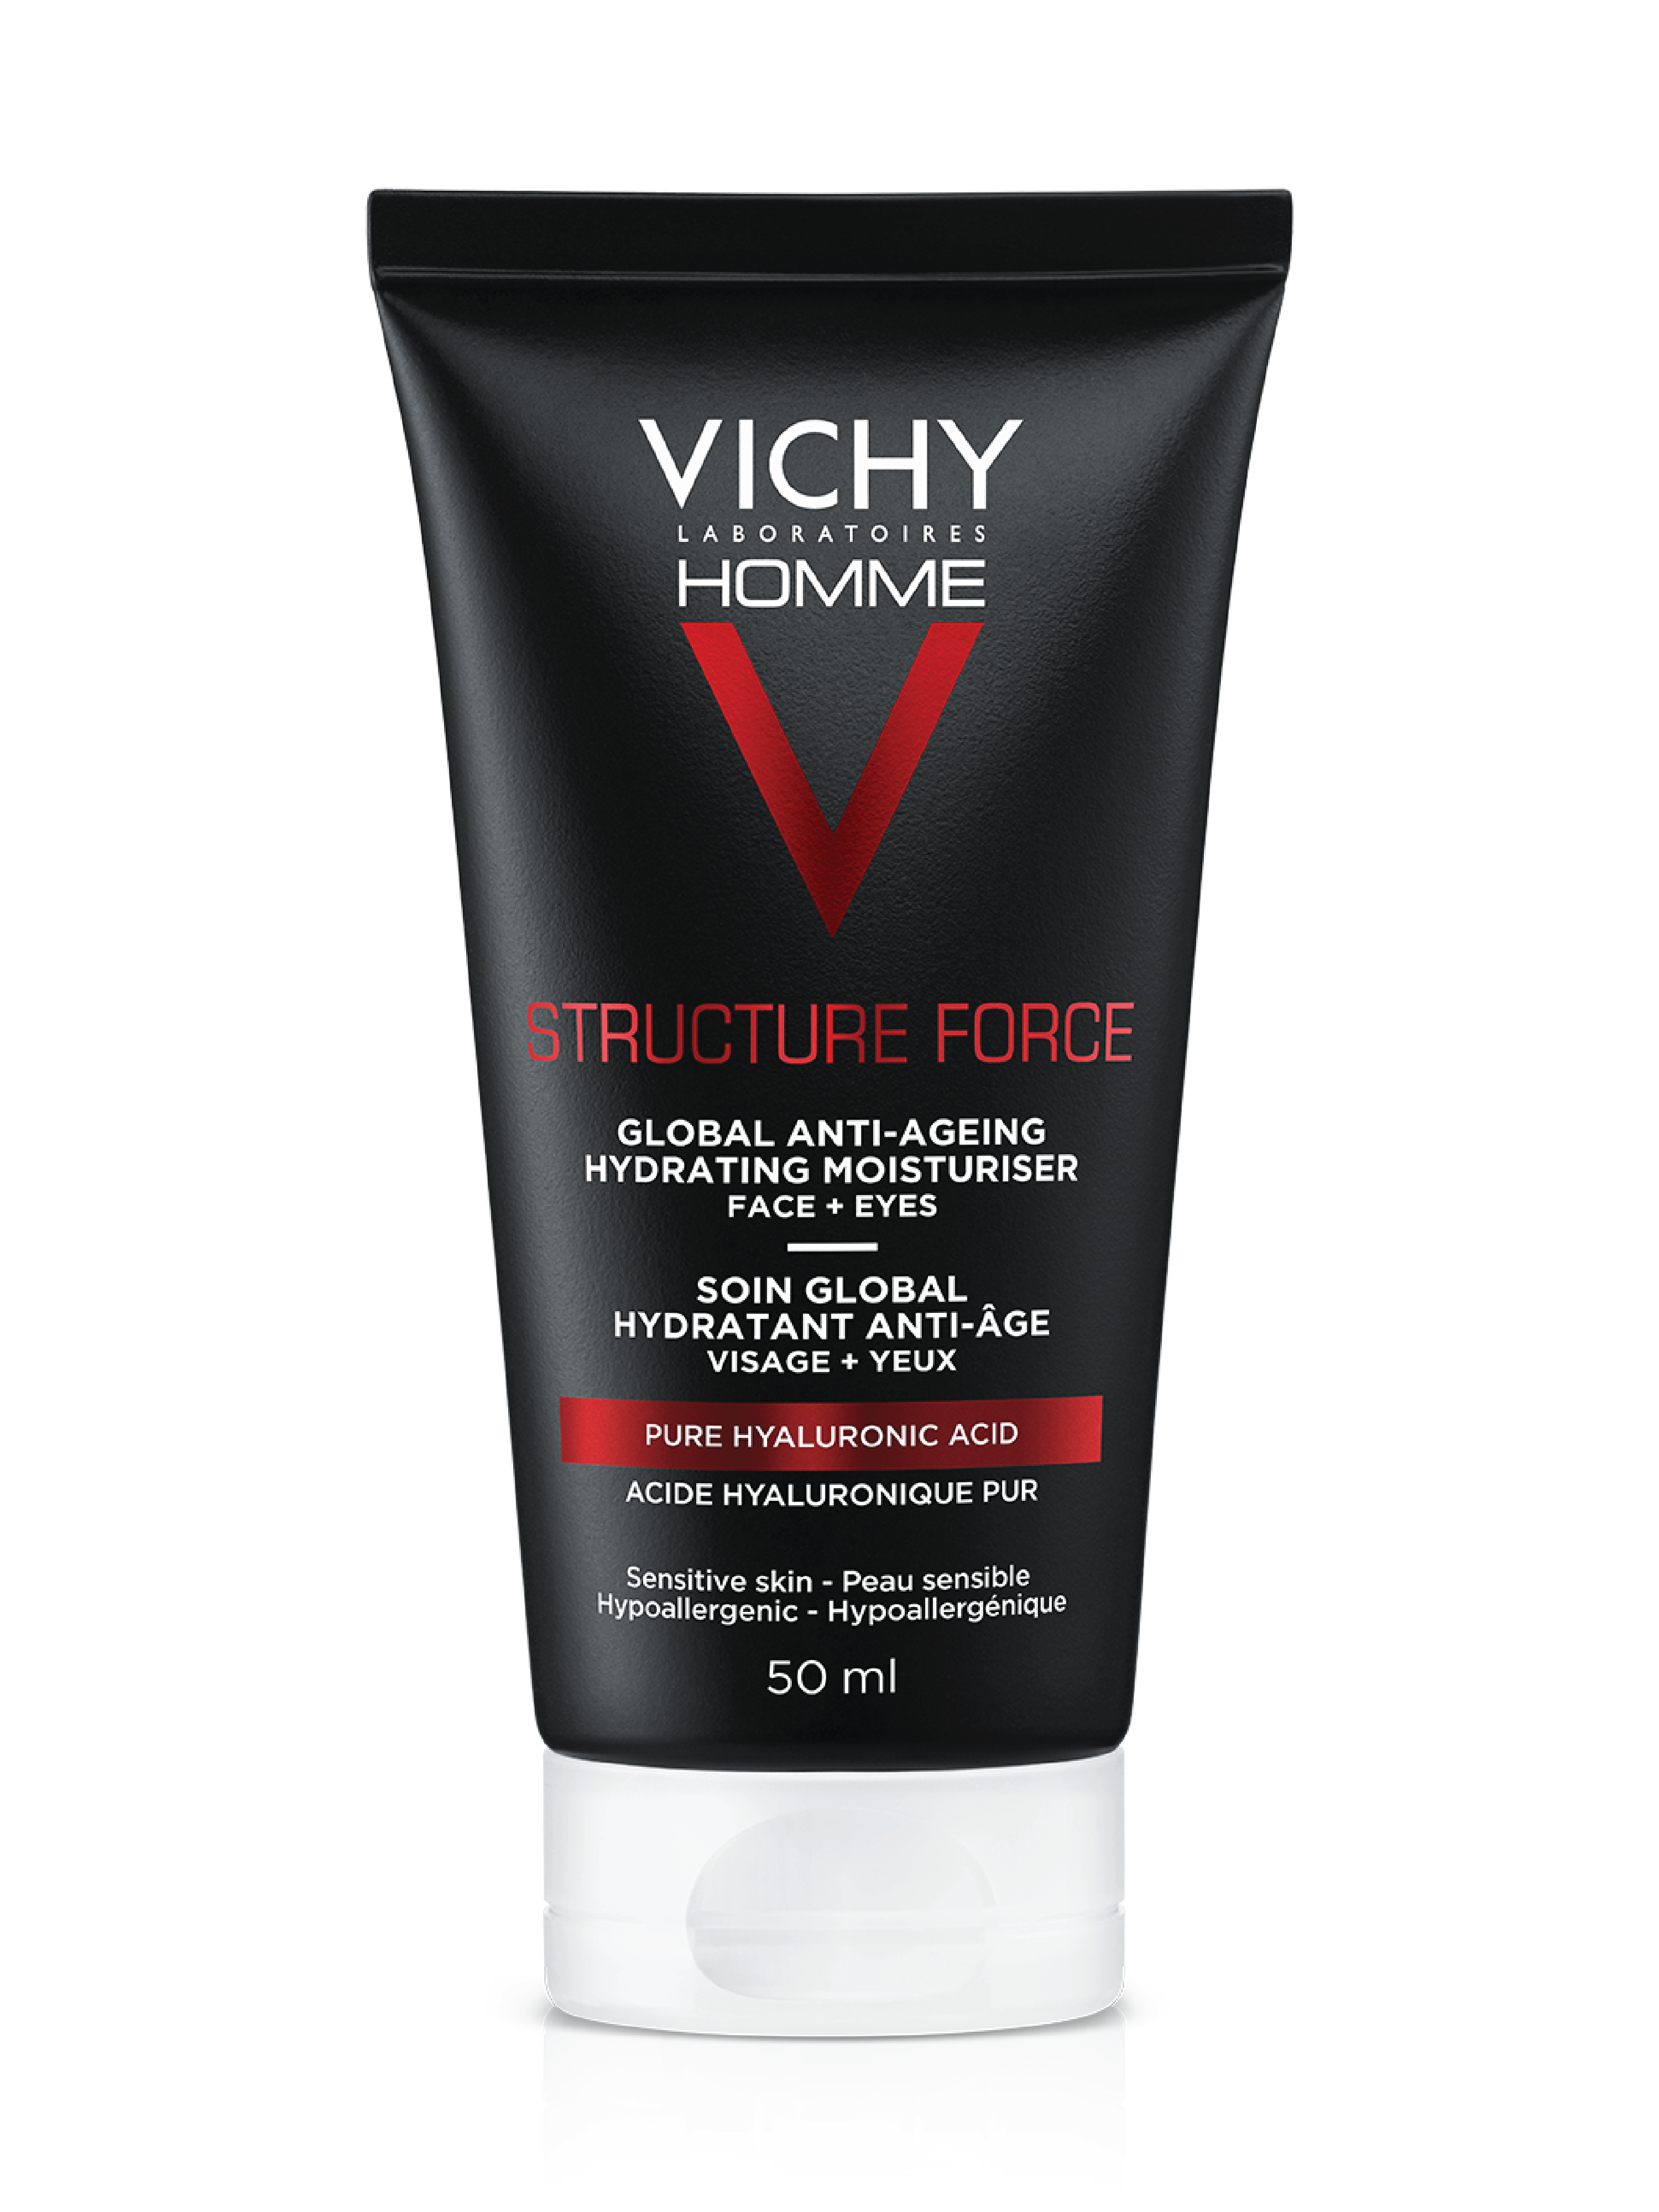 Vichy Homme Structure Force Moisturiser Face & Eyes, 50 ml